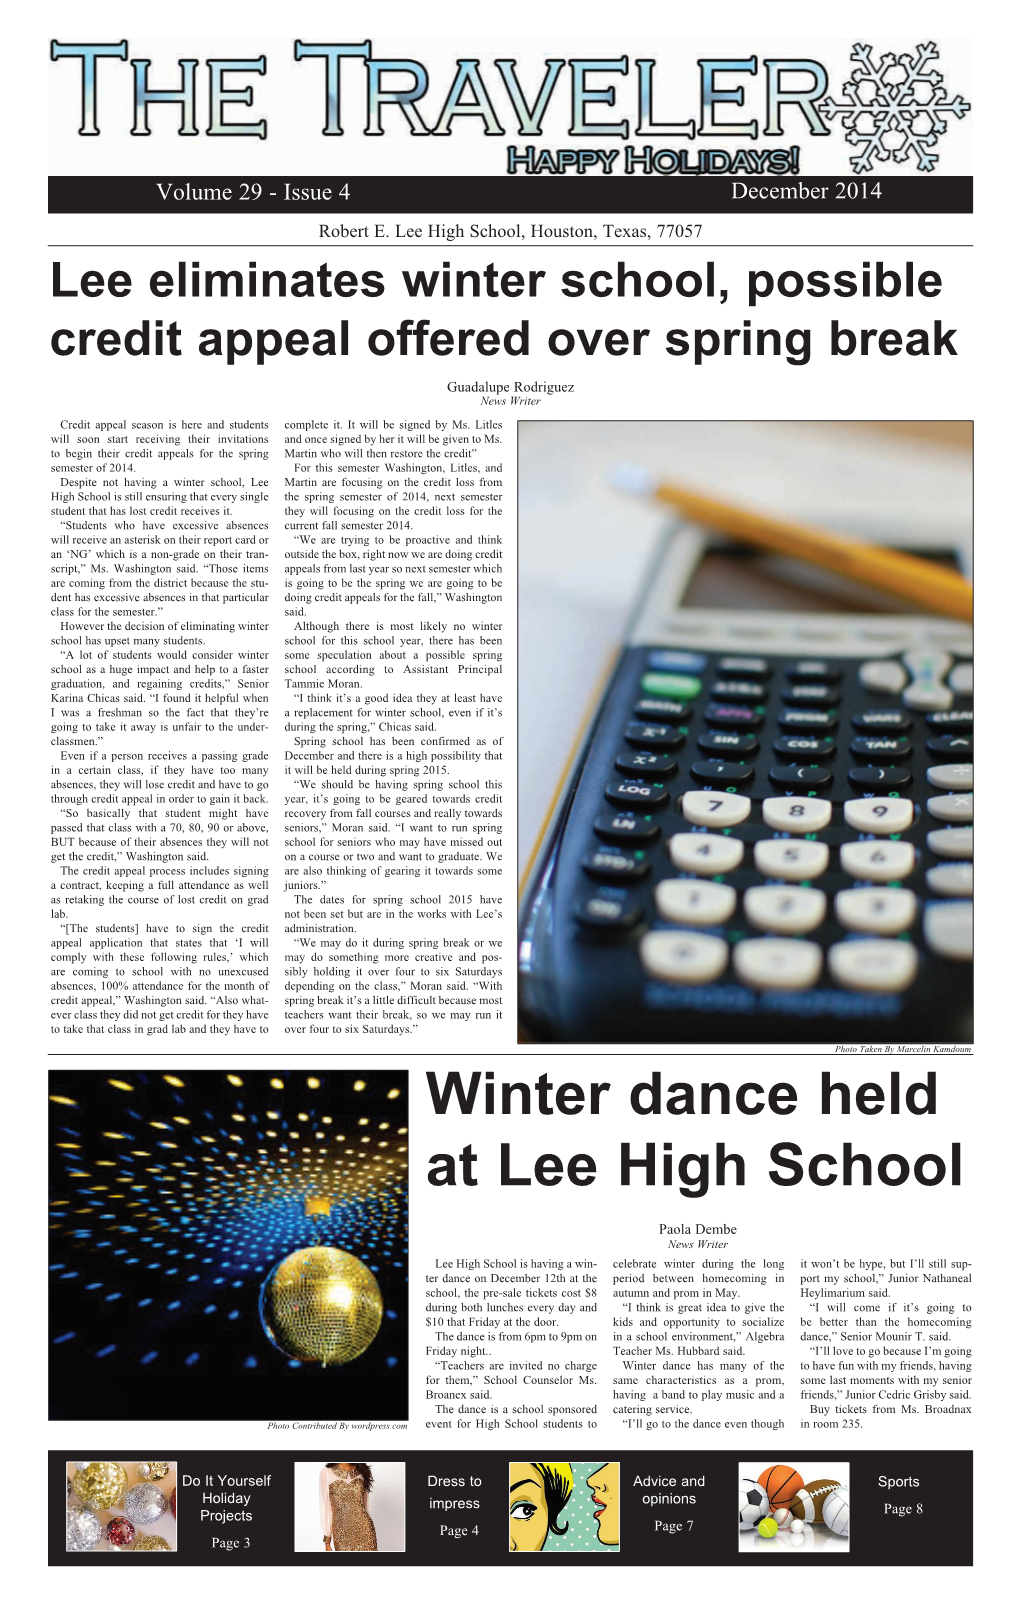 Winter Dance Held at Lee High School